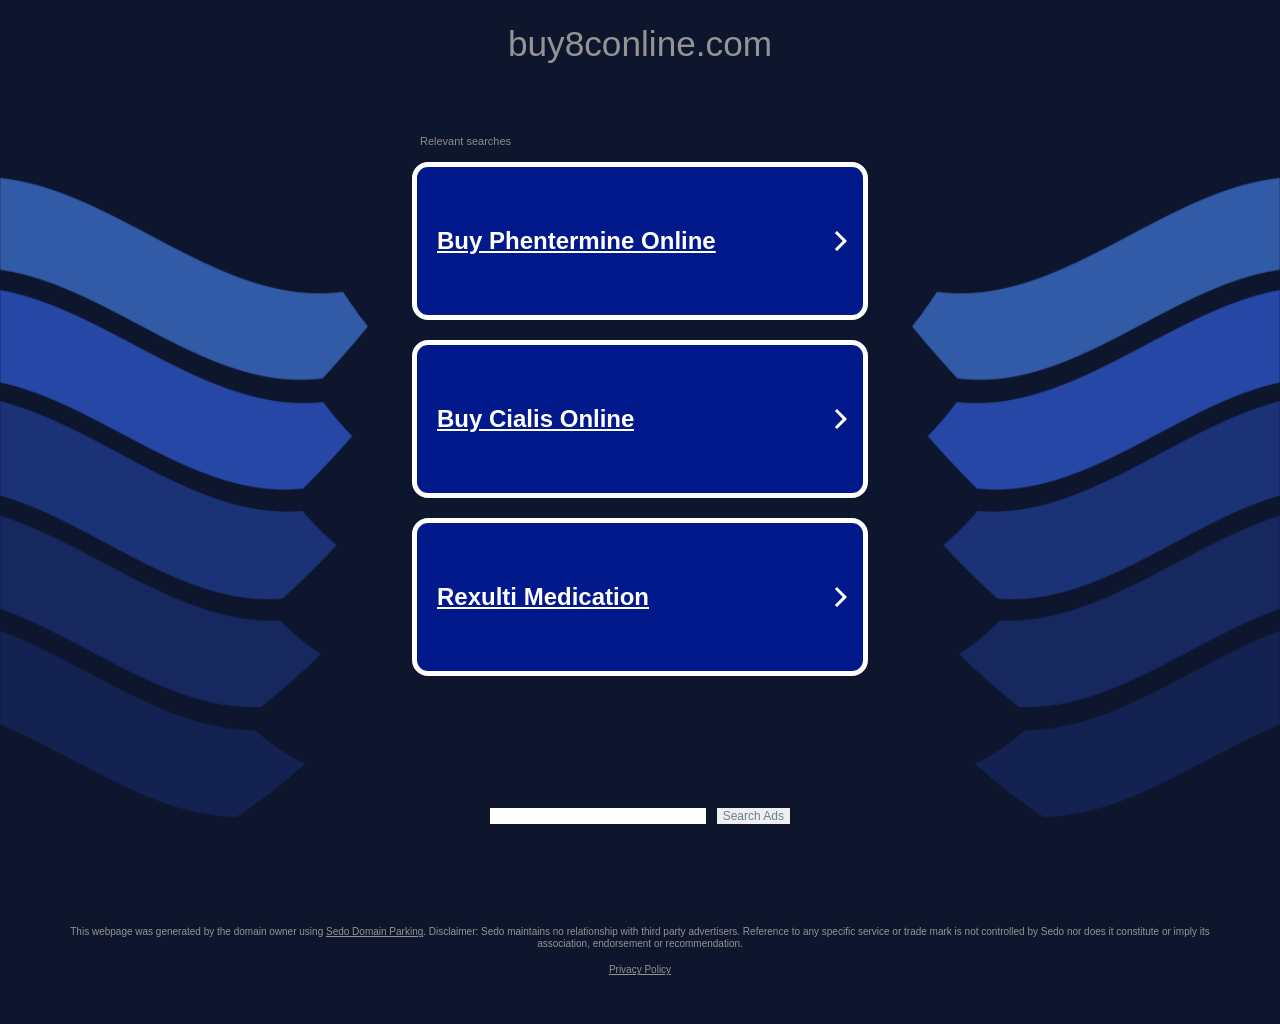 buy8conline.com